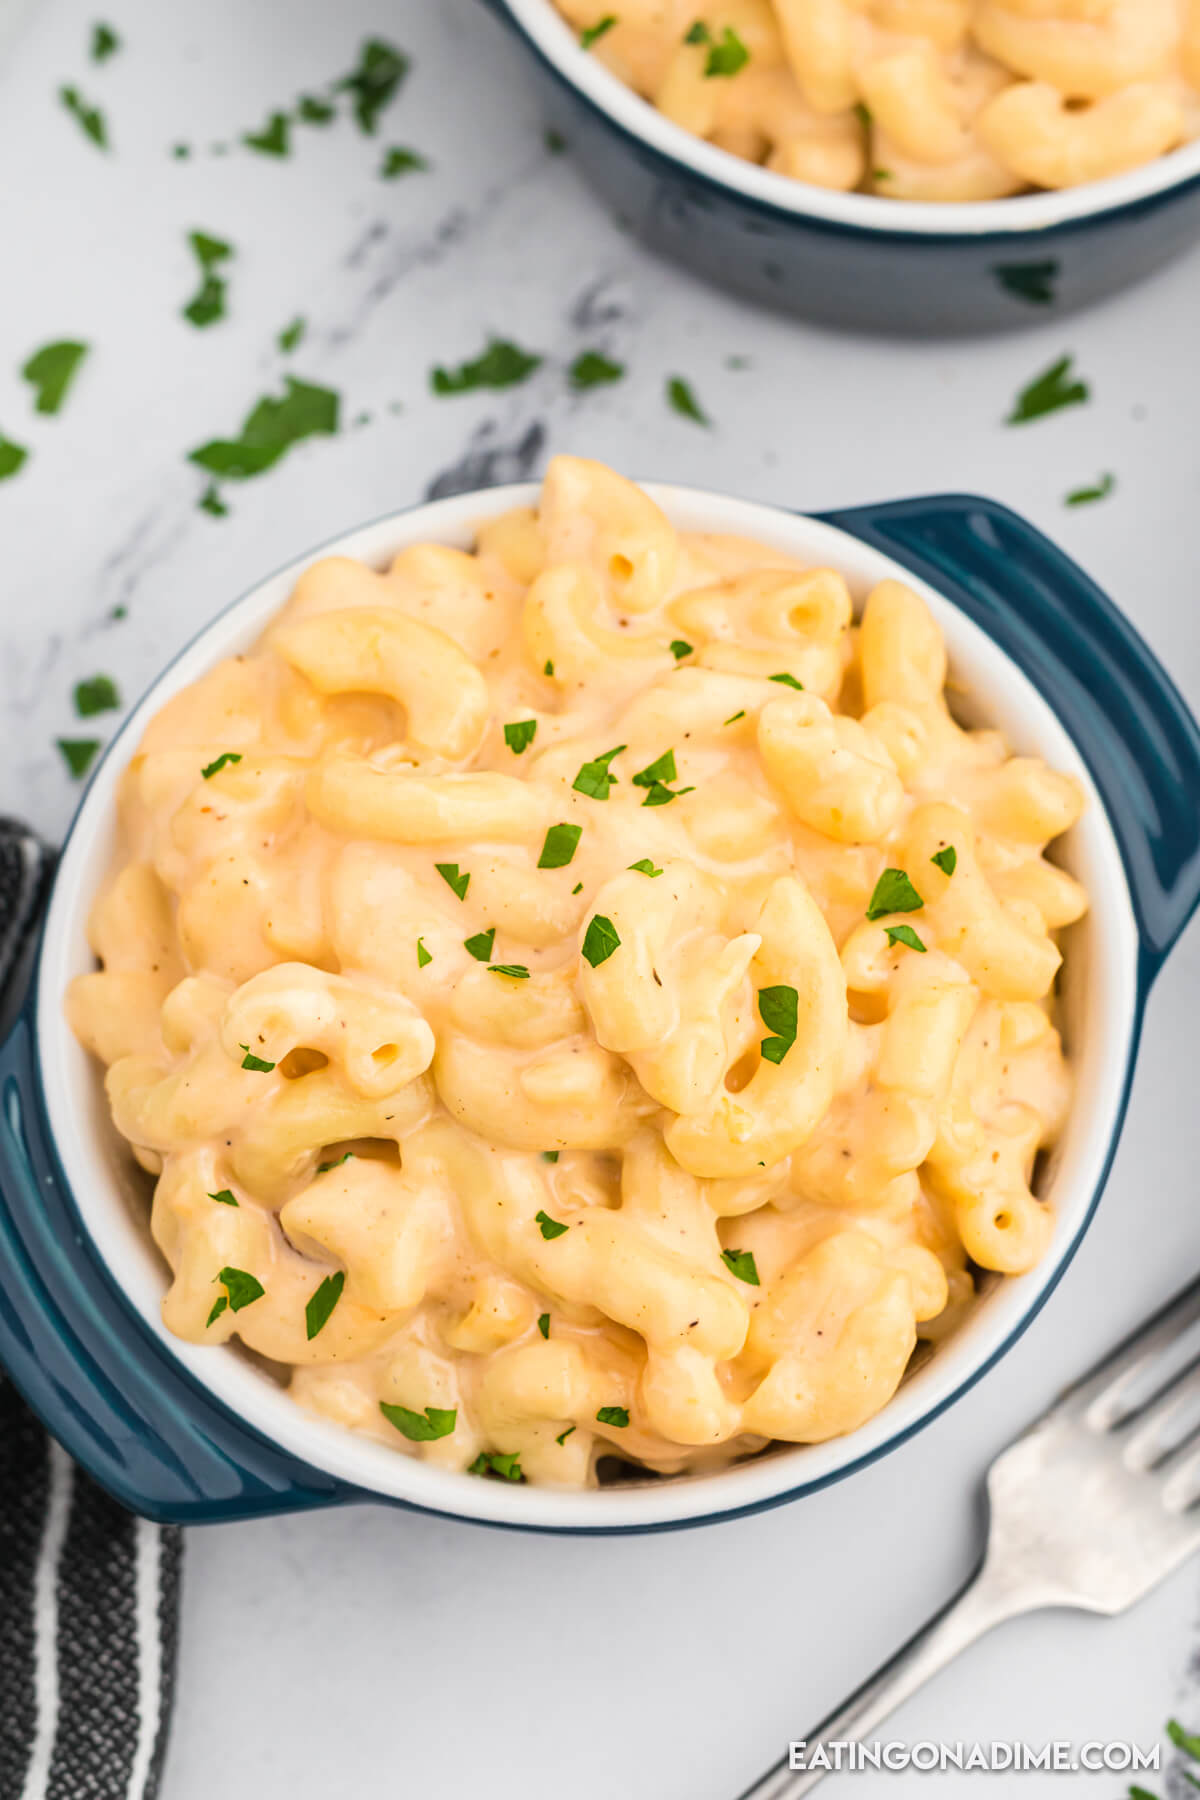 https://www.eatingonadime.com/wp-content/uploads/2019/06/Crock-Pot-Macaroni-and-Cheese-Recipe-1200-x-1800-6482.jpg